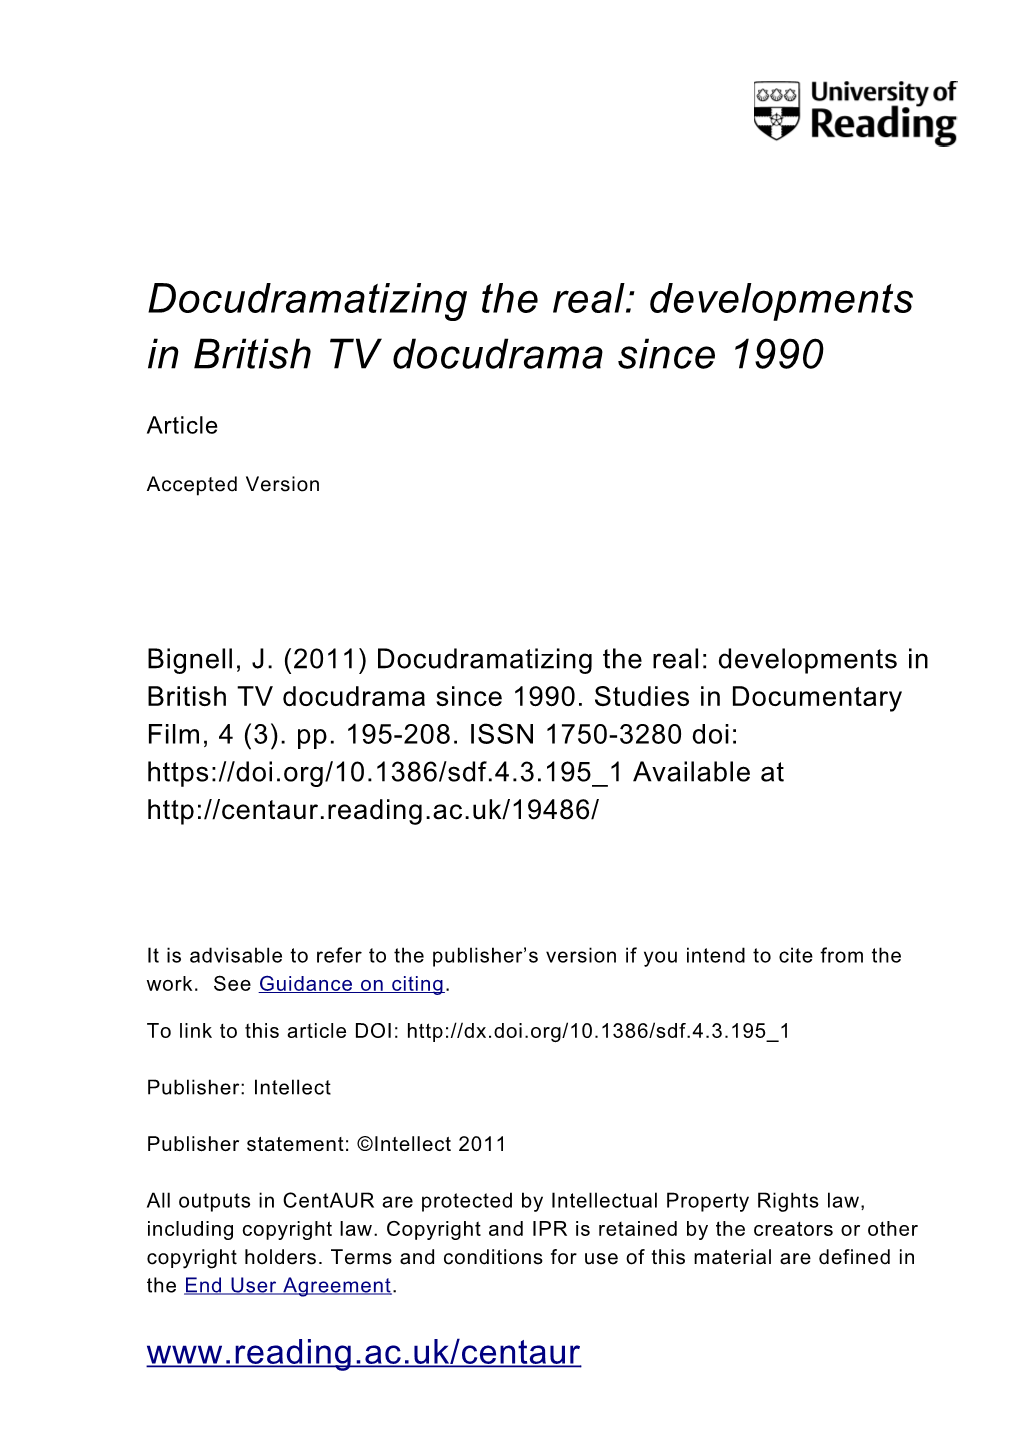 Developments in British TV Docudrama Since 1990